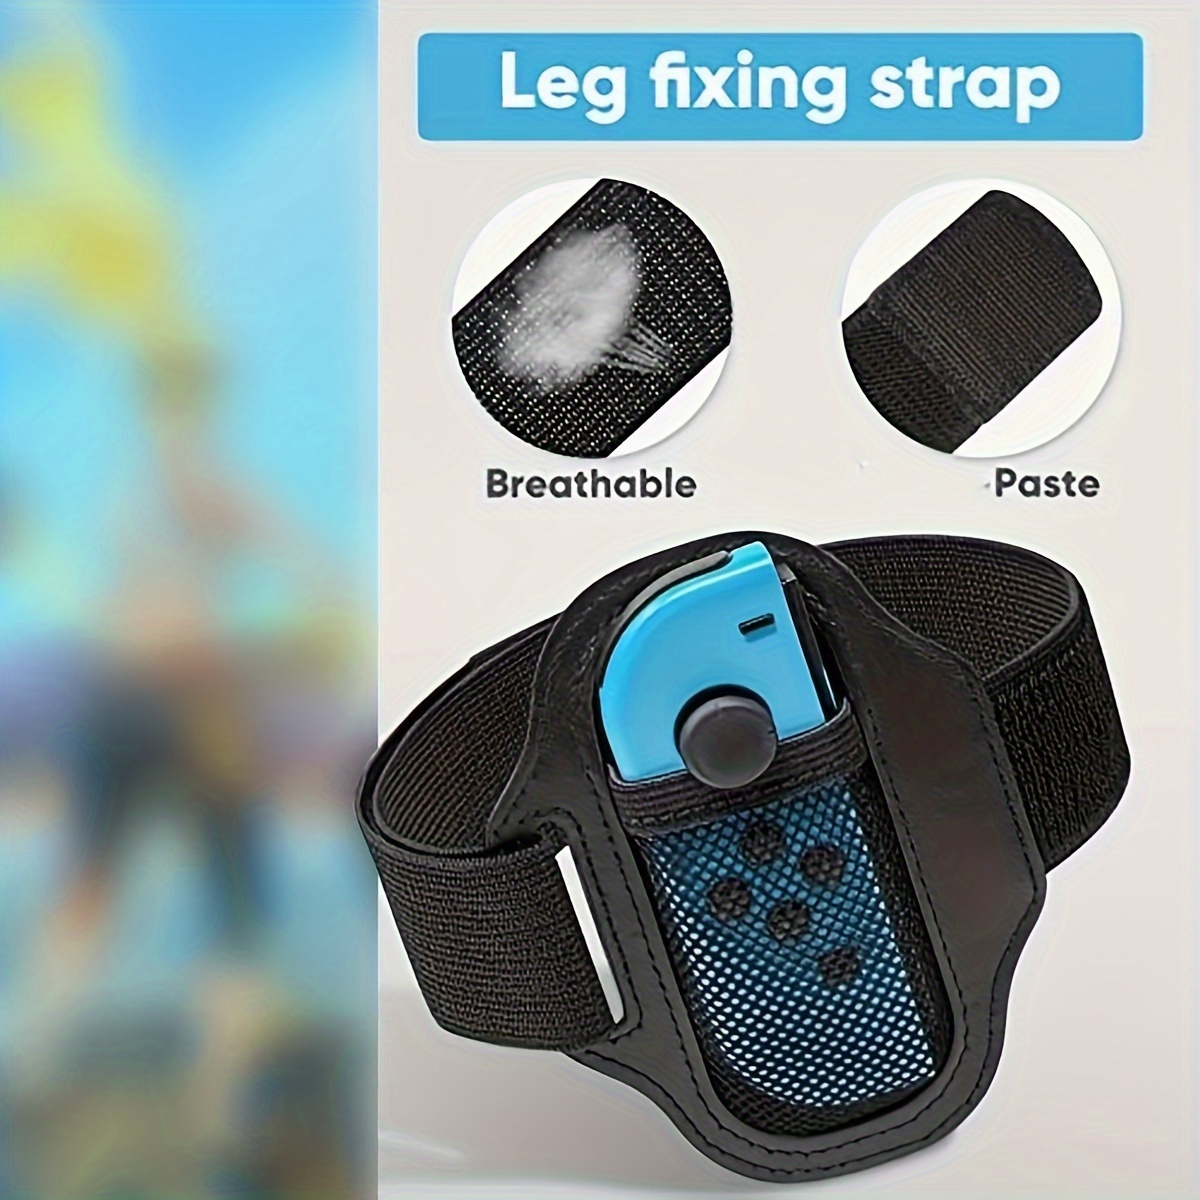 Nintendo Switch Leg Strap Accessory For Nintendo Joy-Con Controller *BRAND  NEW*